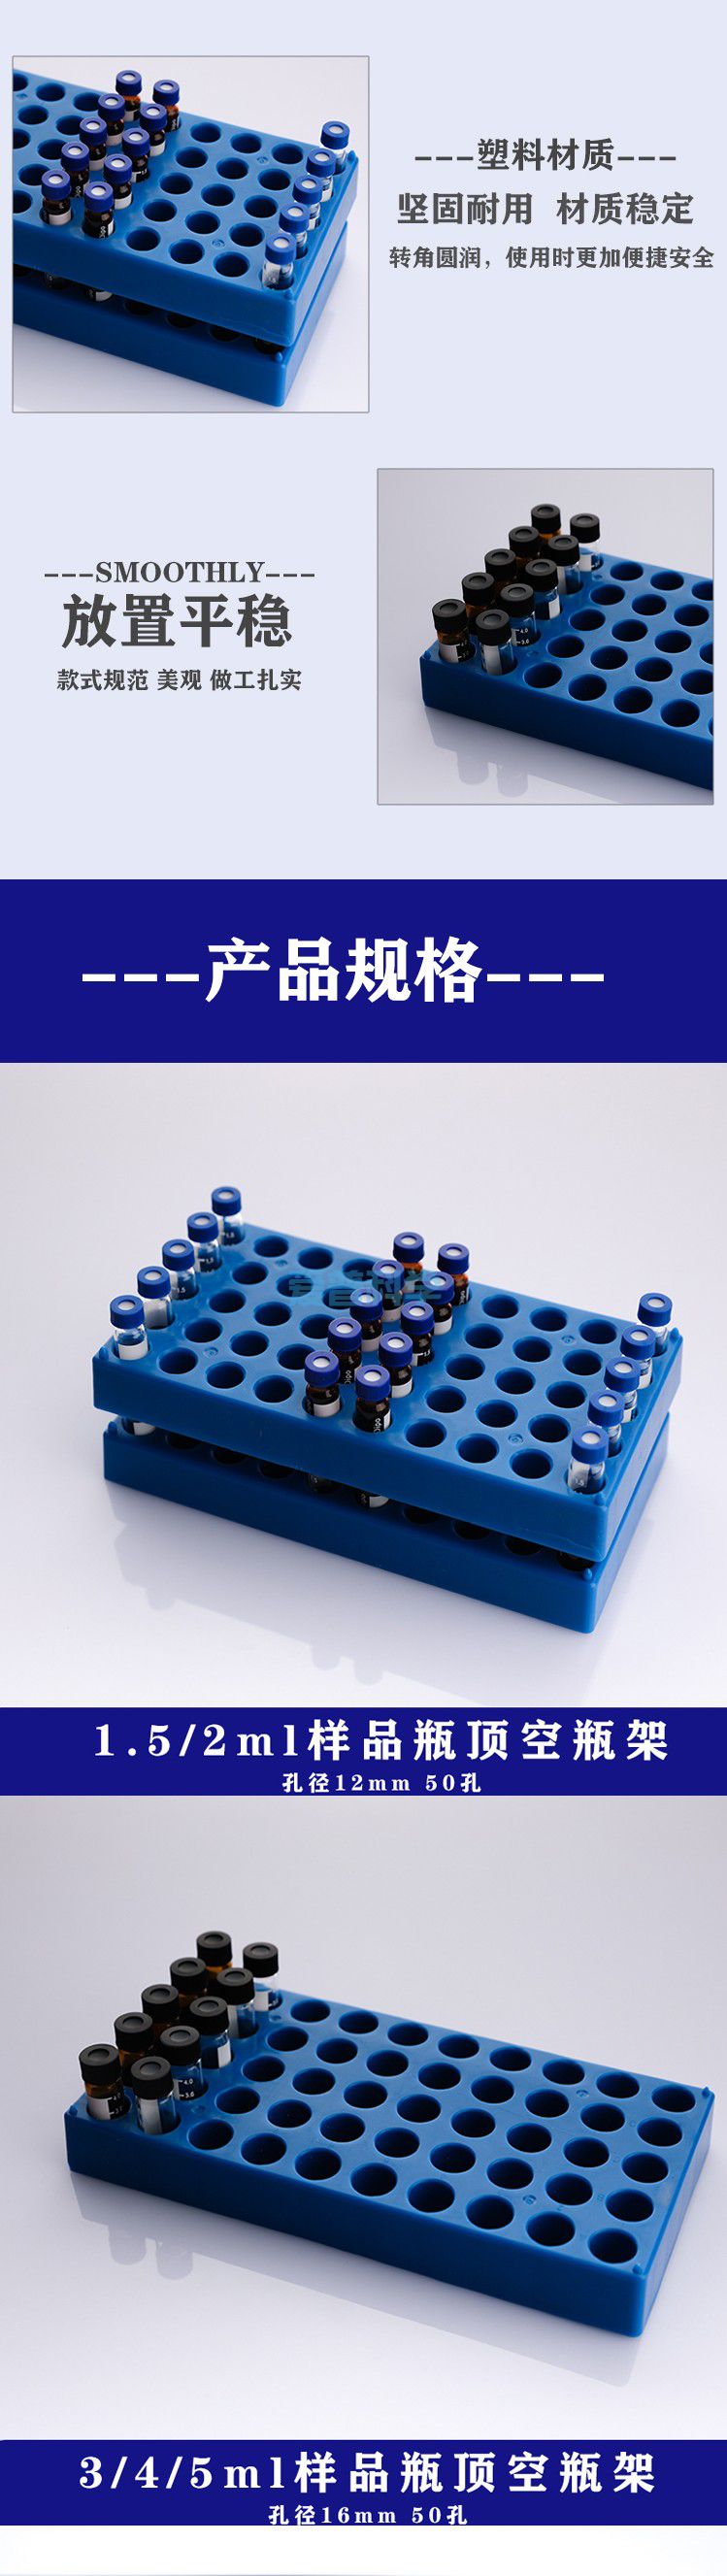 5ml塑料进样瓶架/冻存管架,50孔,蓝色(图1)